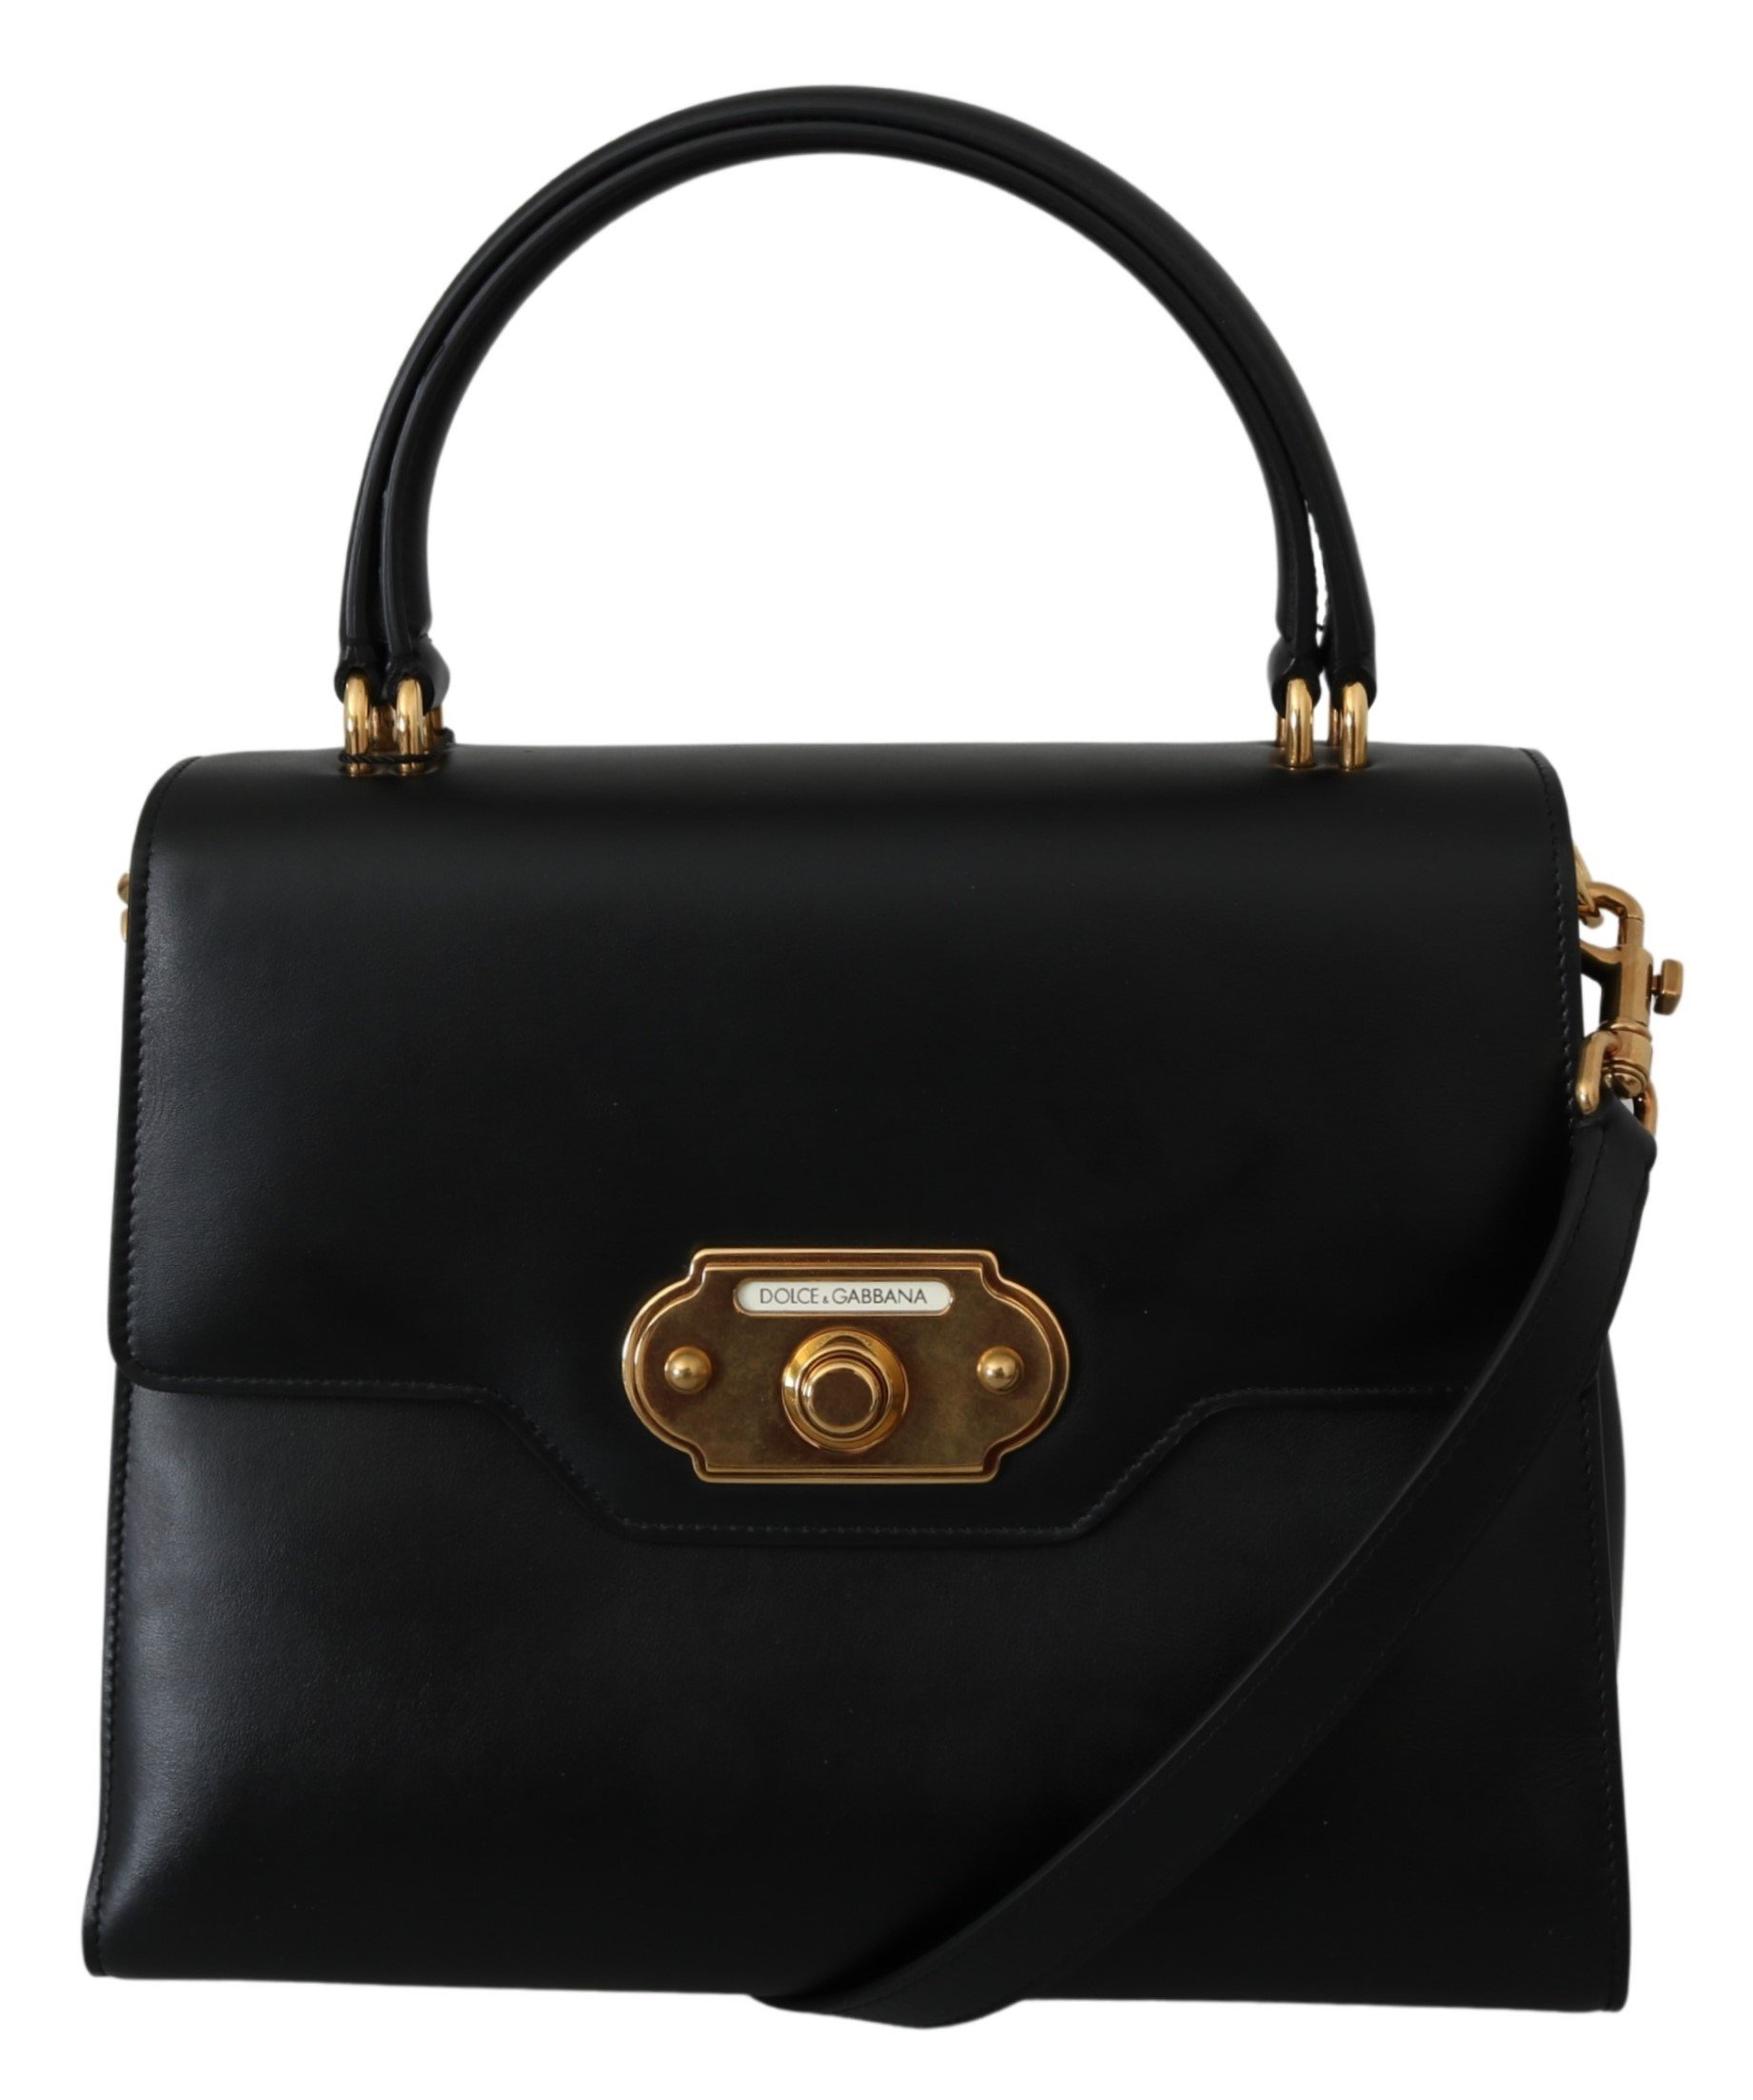 Dolce & Gabbana Women's Leather WELCOME Crossbody Bag Black VAS9959